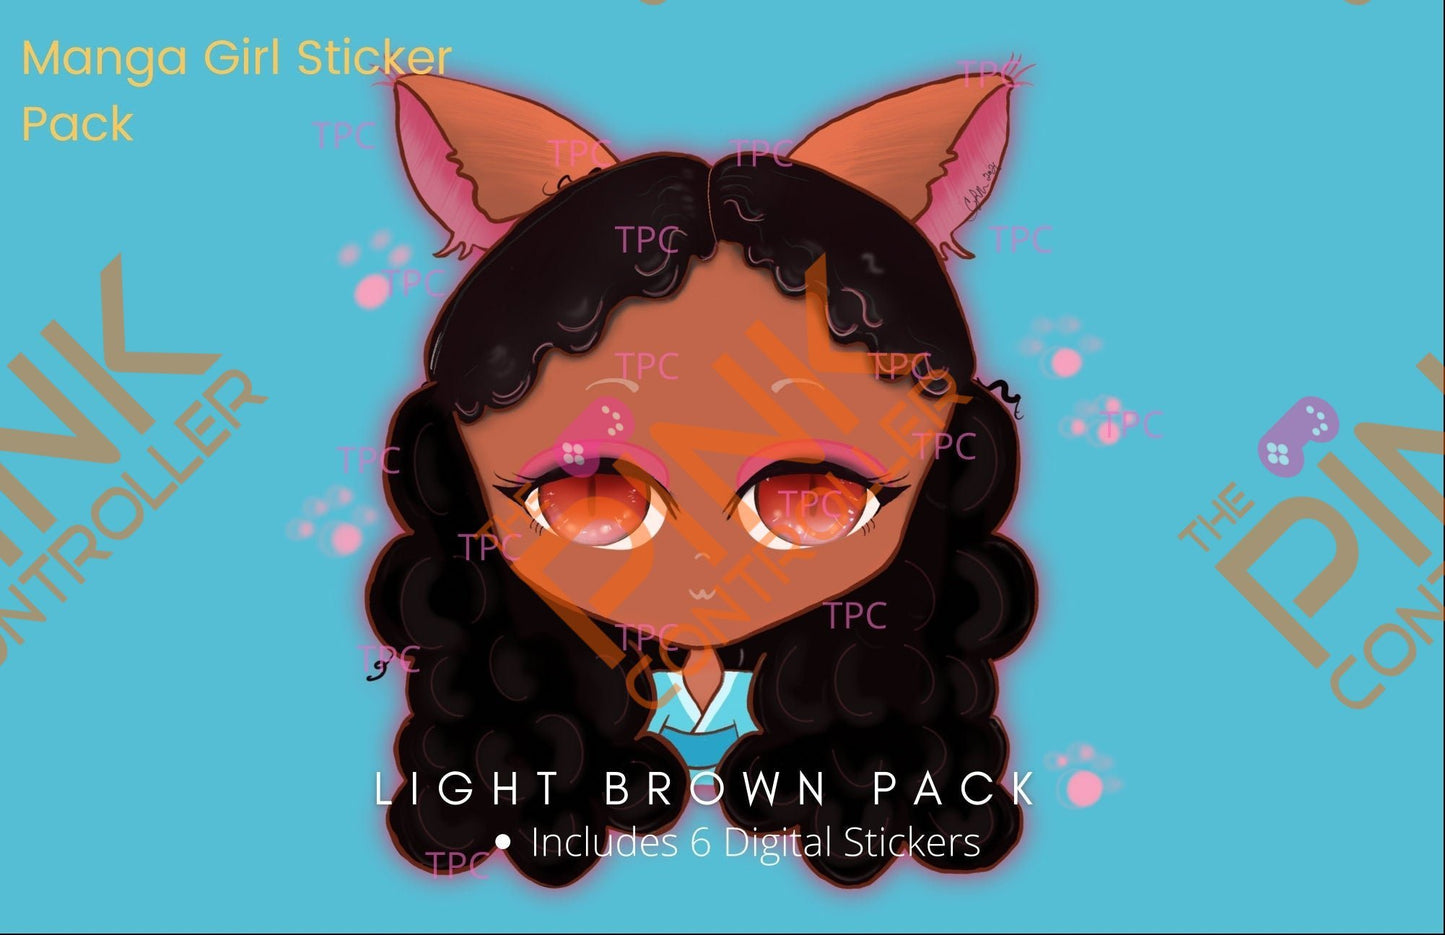 Manga Girl Sticker Pack (Light Brown Skin Tone)|Manga|Streamer|Twitch|BlackGirl Magic|Zinnia|DigitalSticker